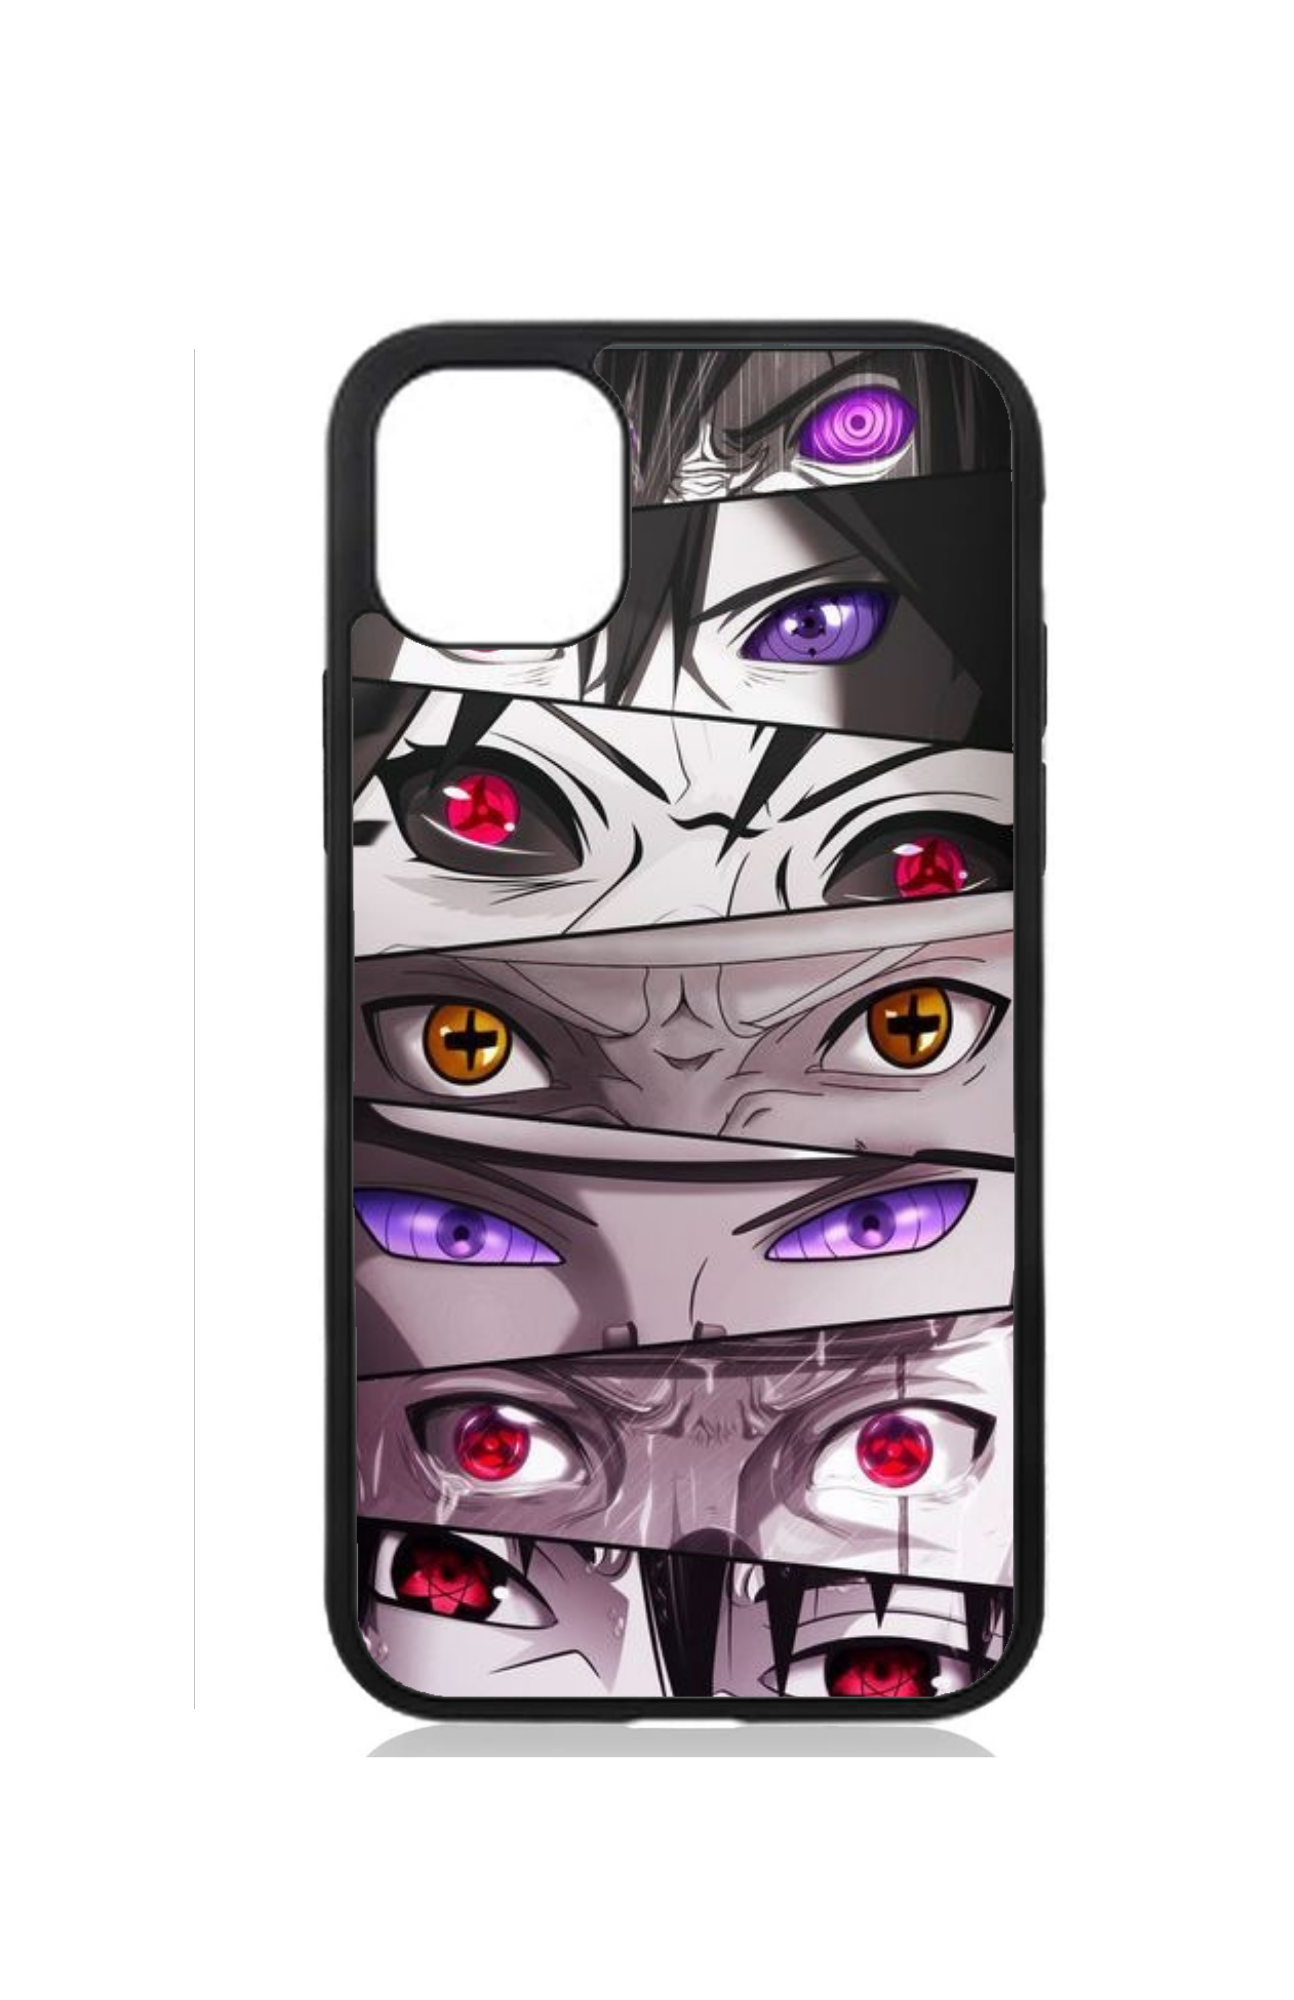 Naruto eyes / Anime / Uzumaki iPhone case cover protector – Unknown Designz